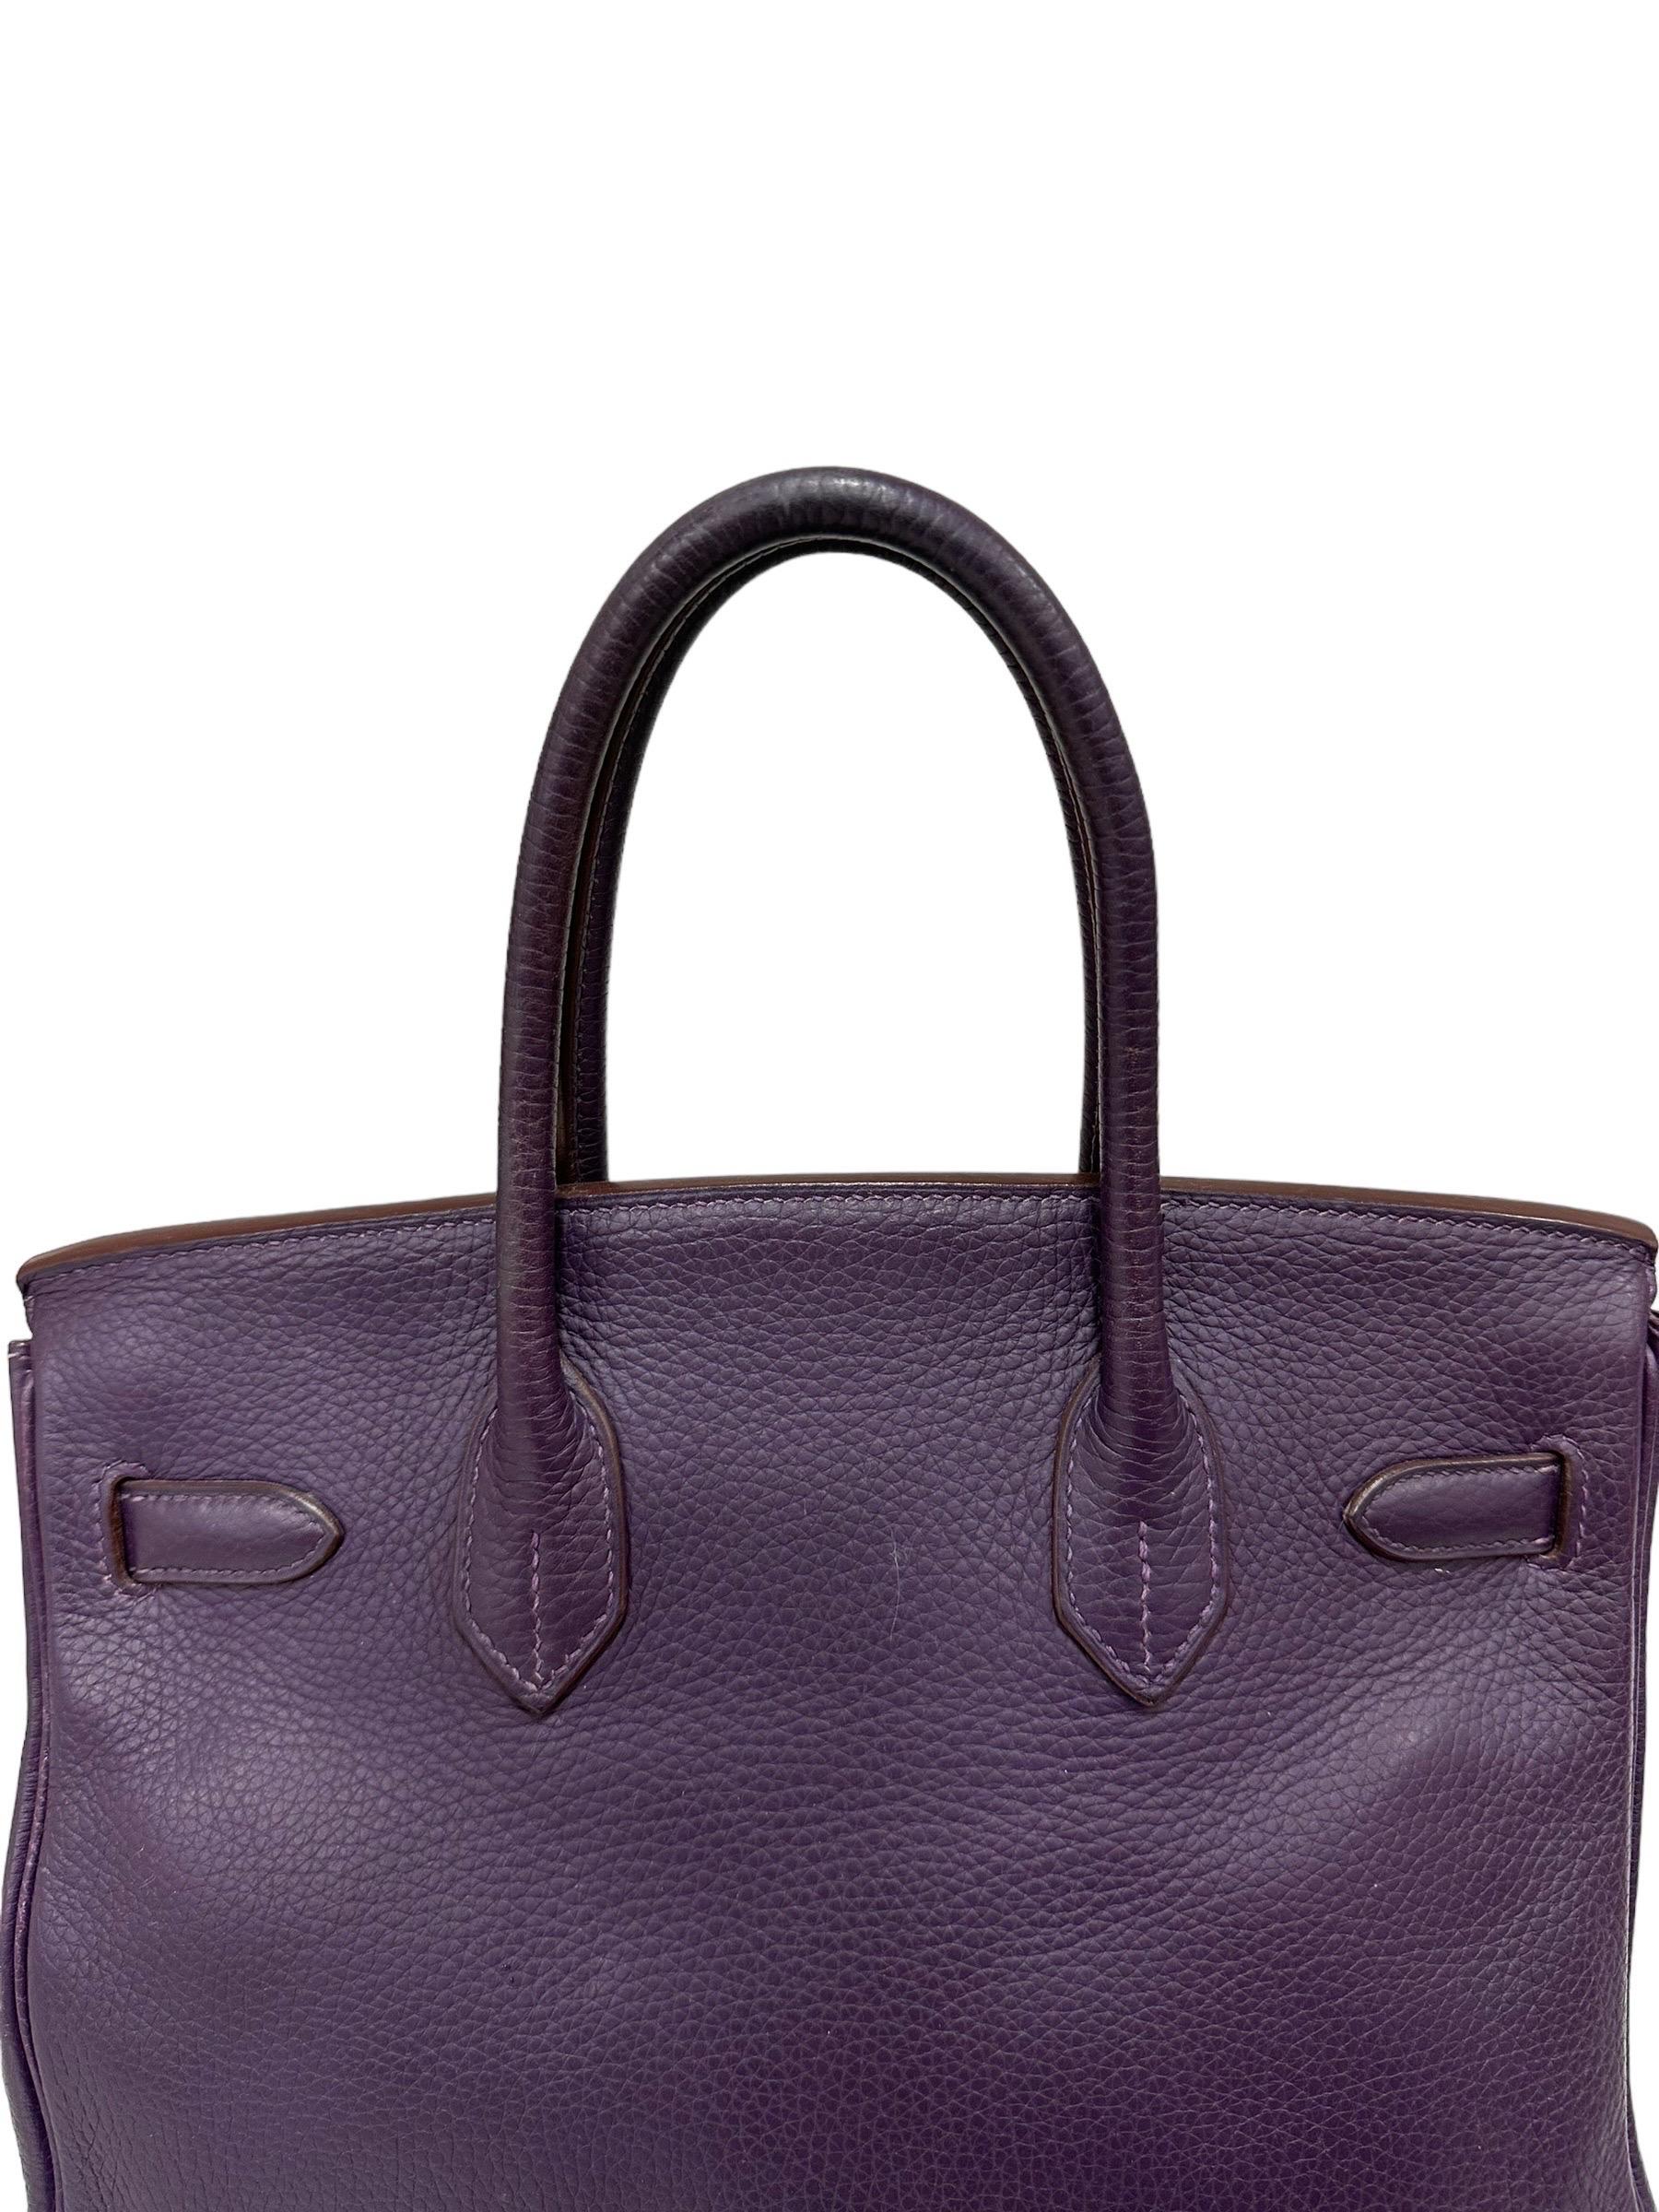 2007 Hermès Birkin 30 Clemence Leather Violet Raisin Top Handle Bag For Sale 4